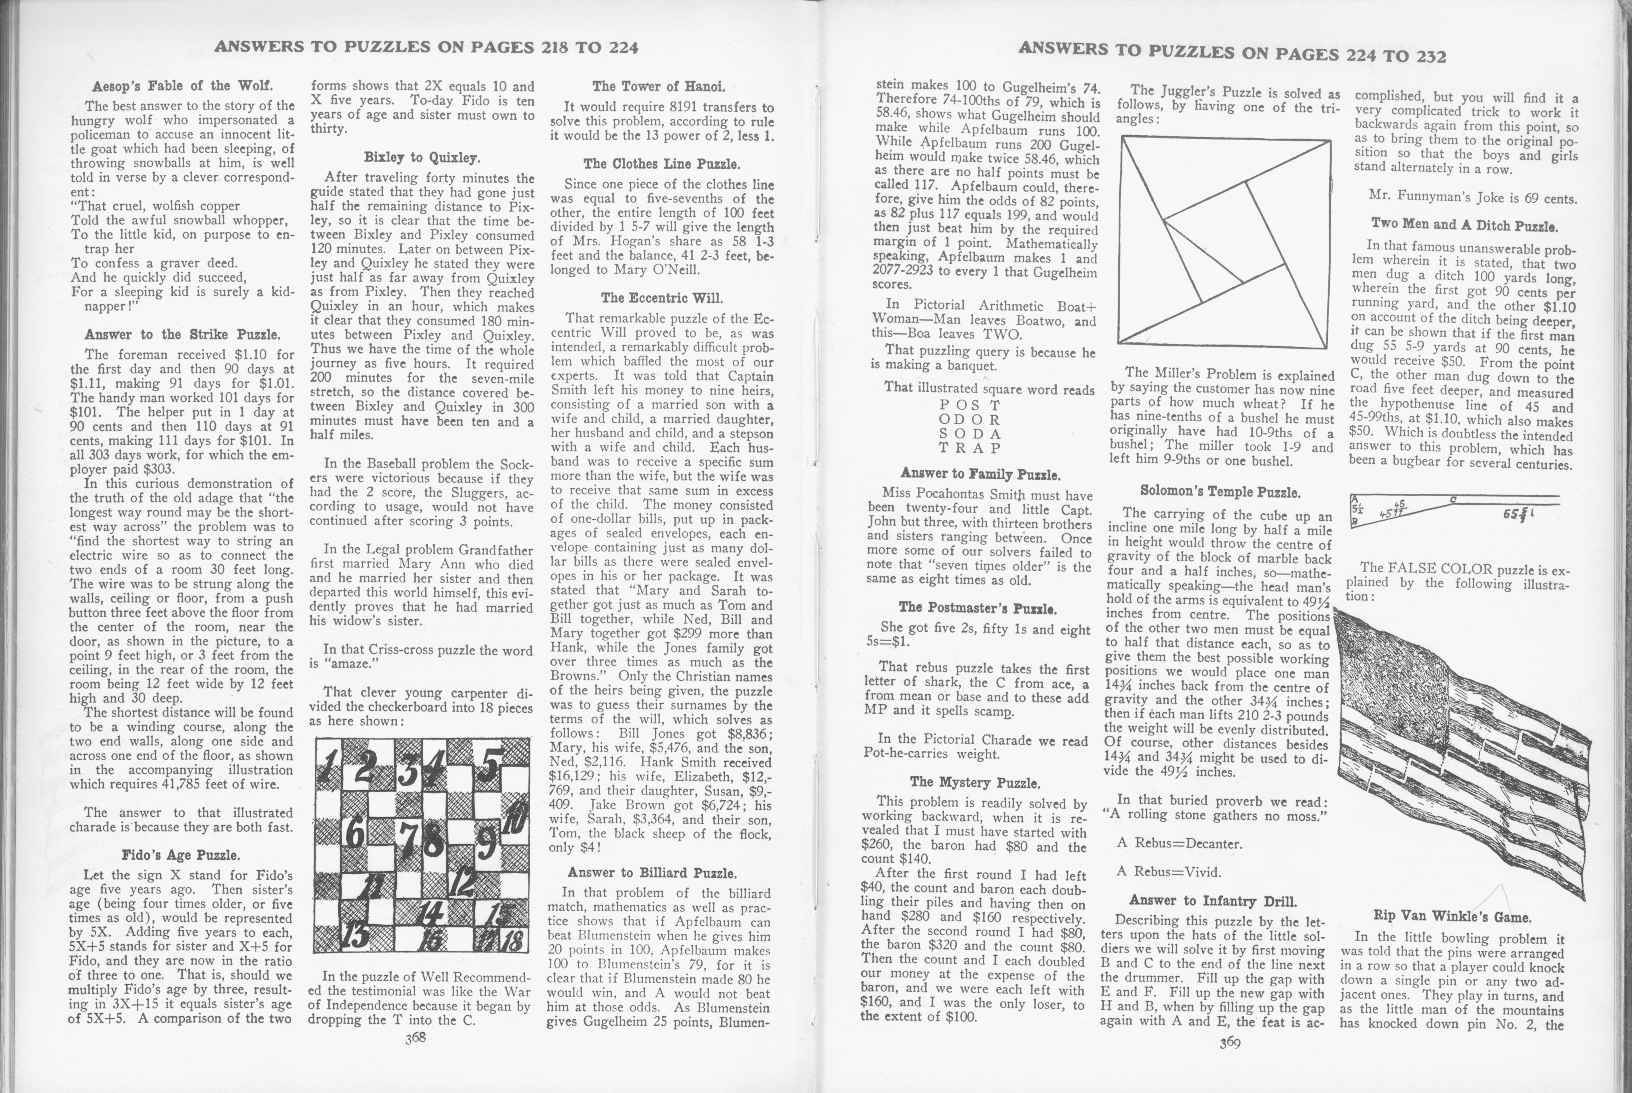 Sam Loyd - Cyclopedia of Puzzles - page 368-369